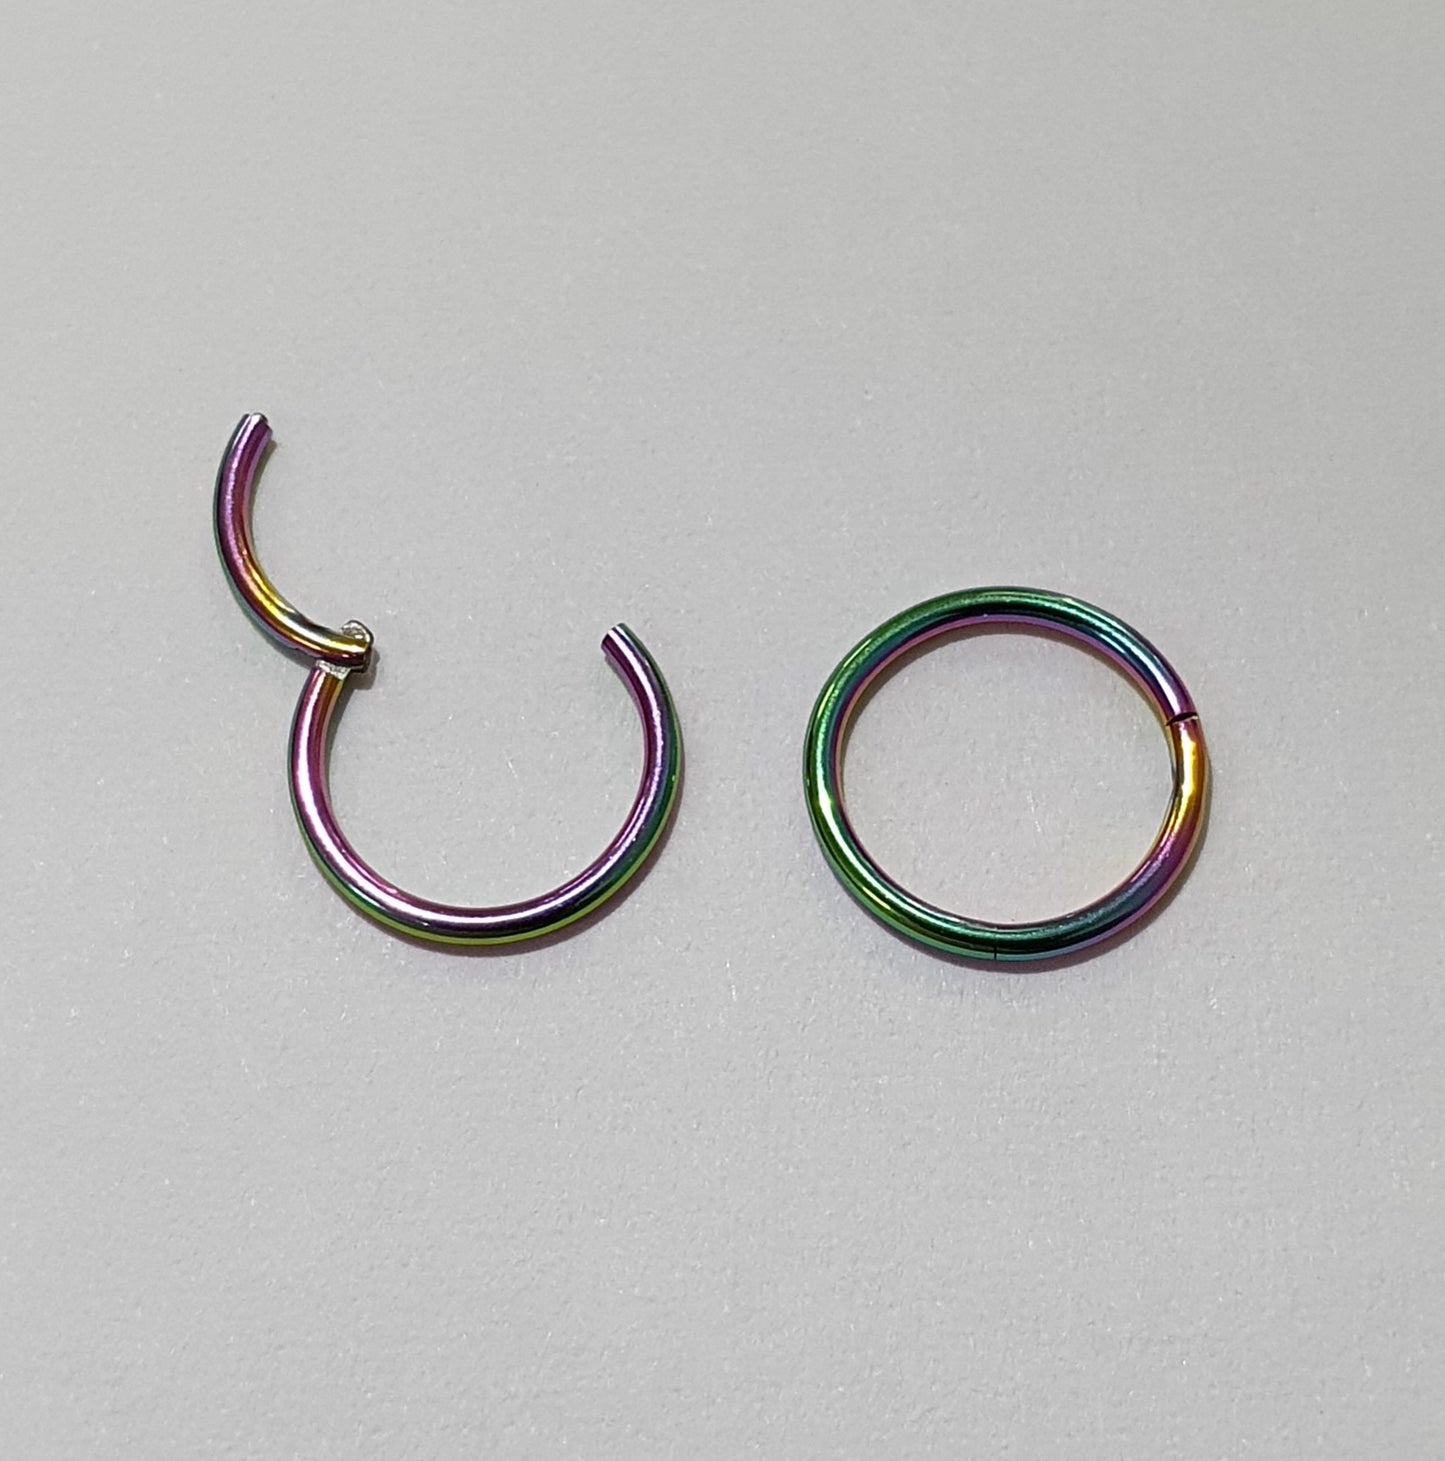 Hinged Segment Rings - 0.8mm(20g) Steel, Titanium, Rainbow, Black, Gold & Rose Gold